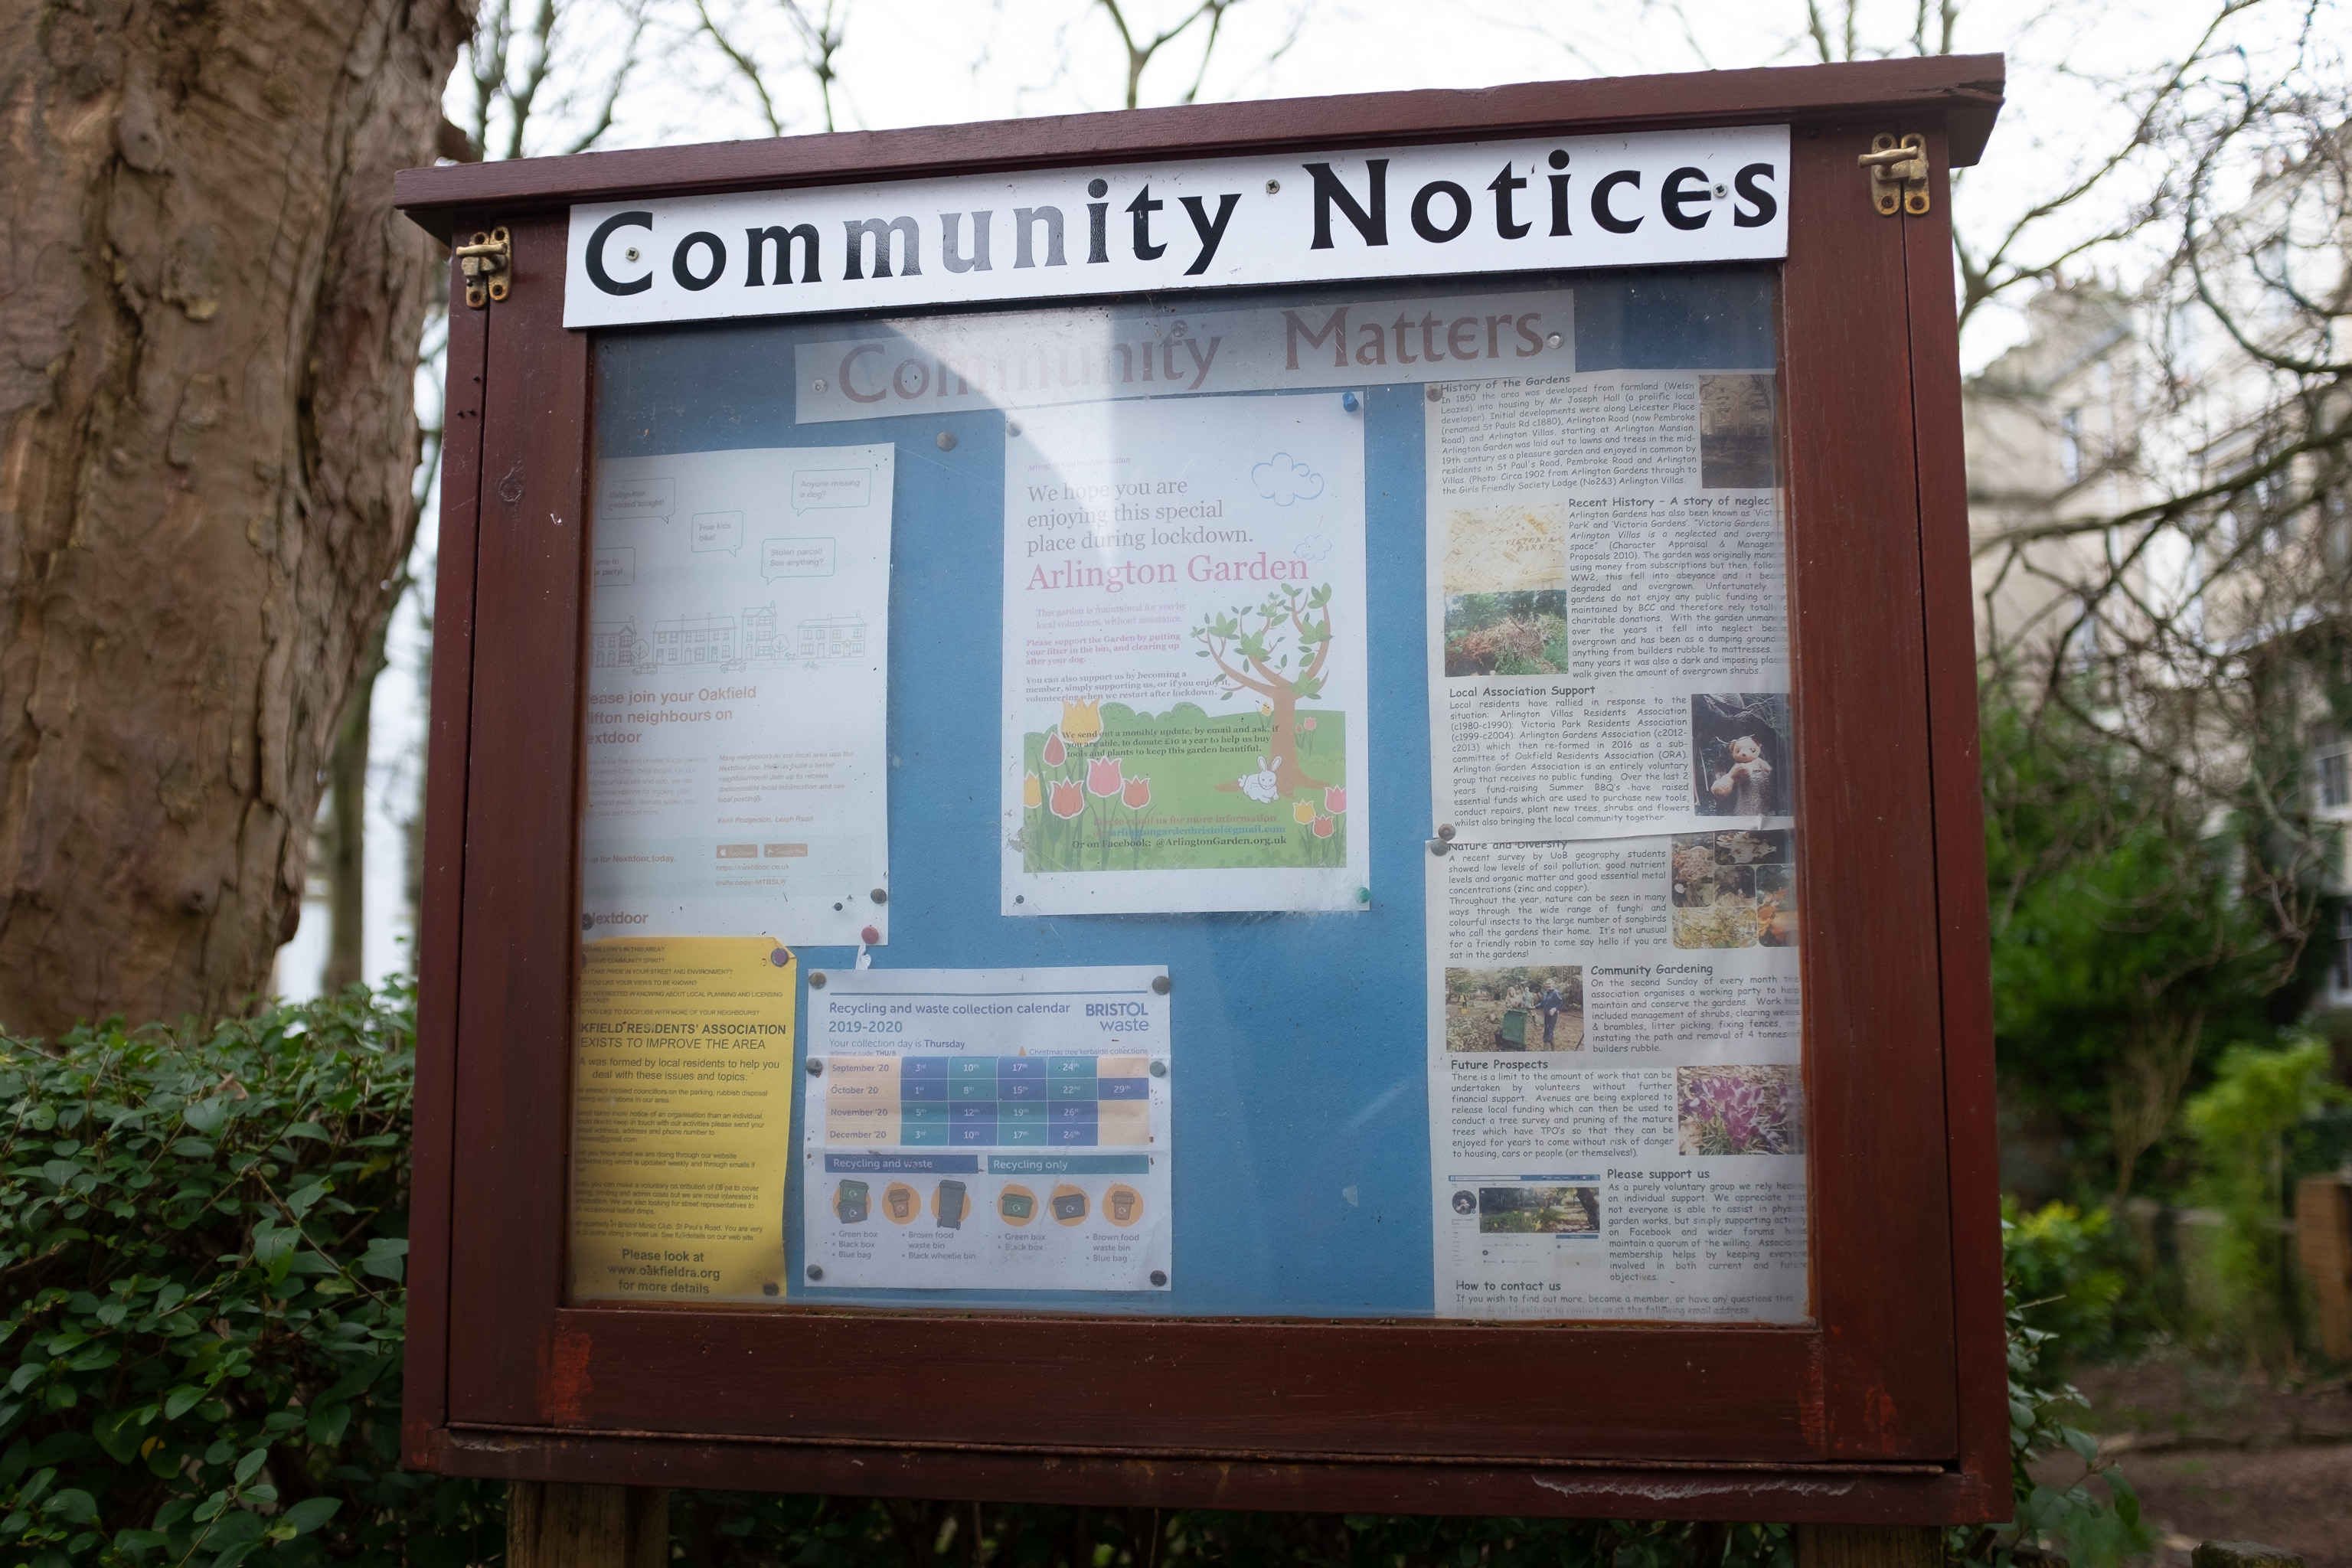 Community Notices
